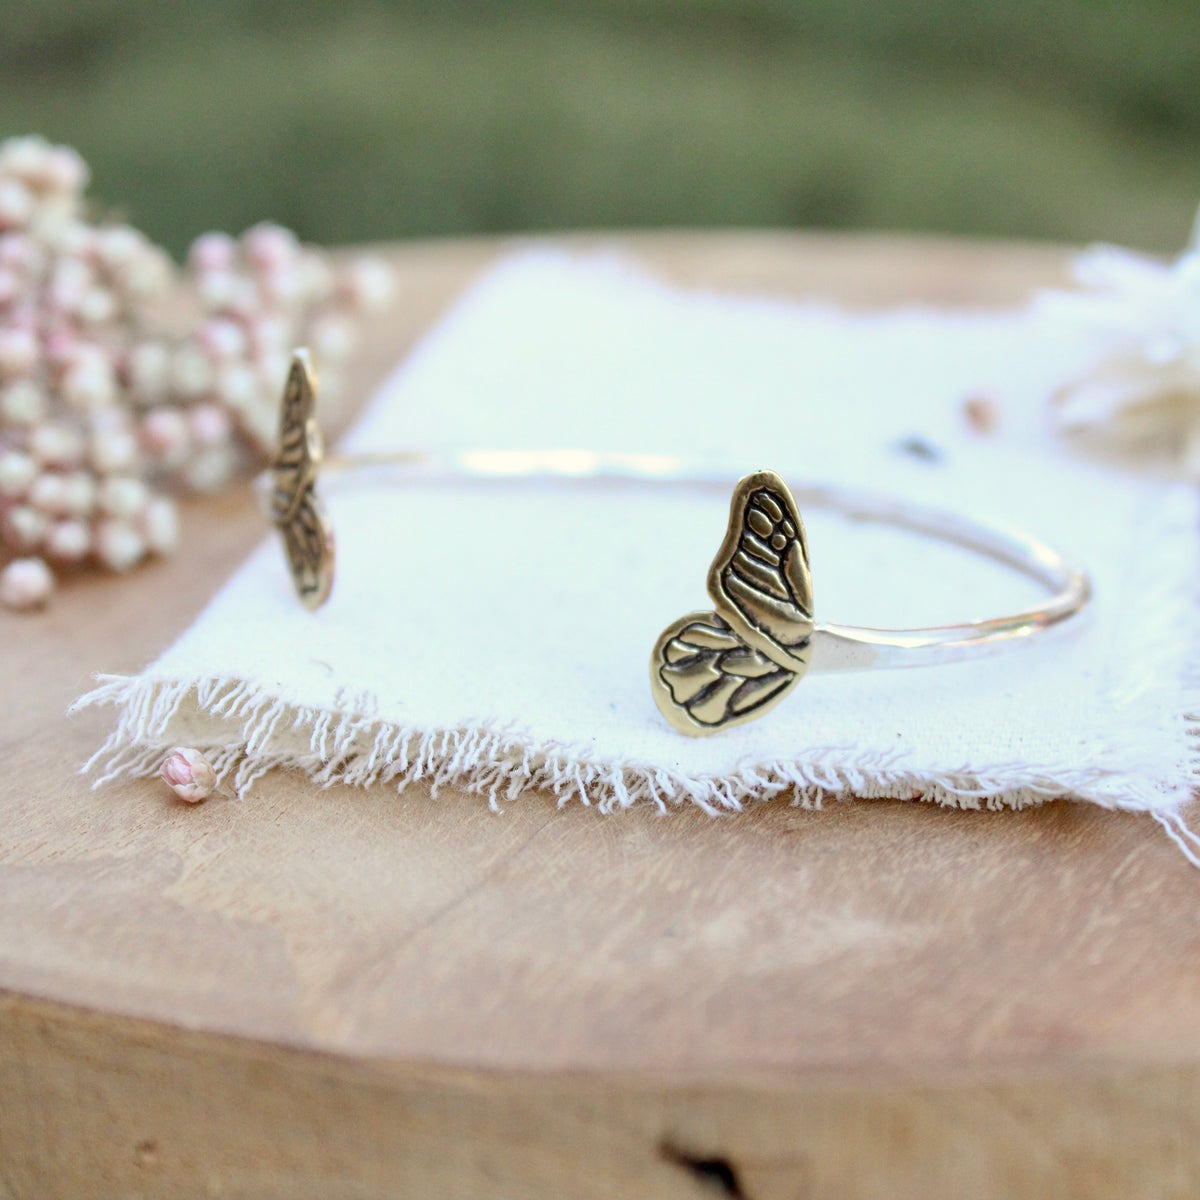 Painted Lady Butterfly Cuff Bracelet